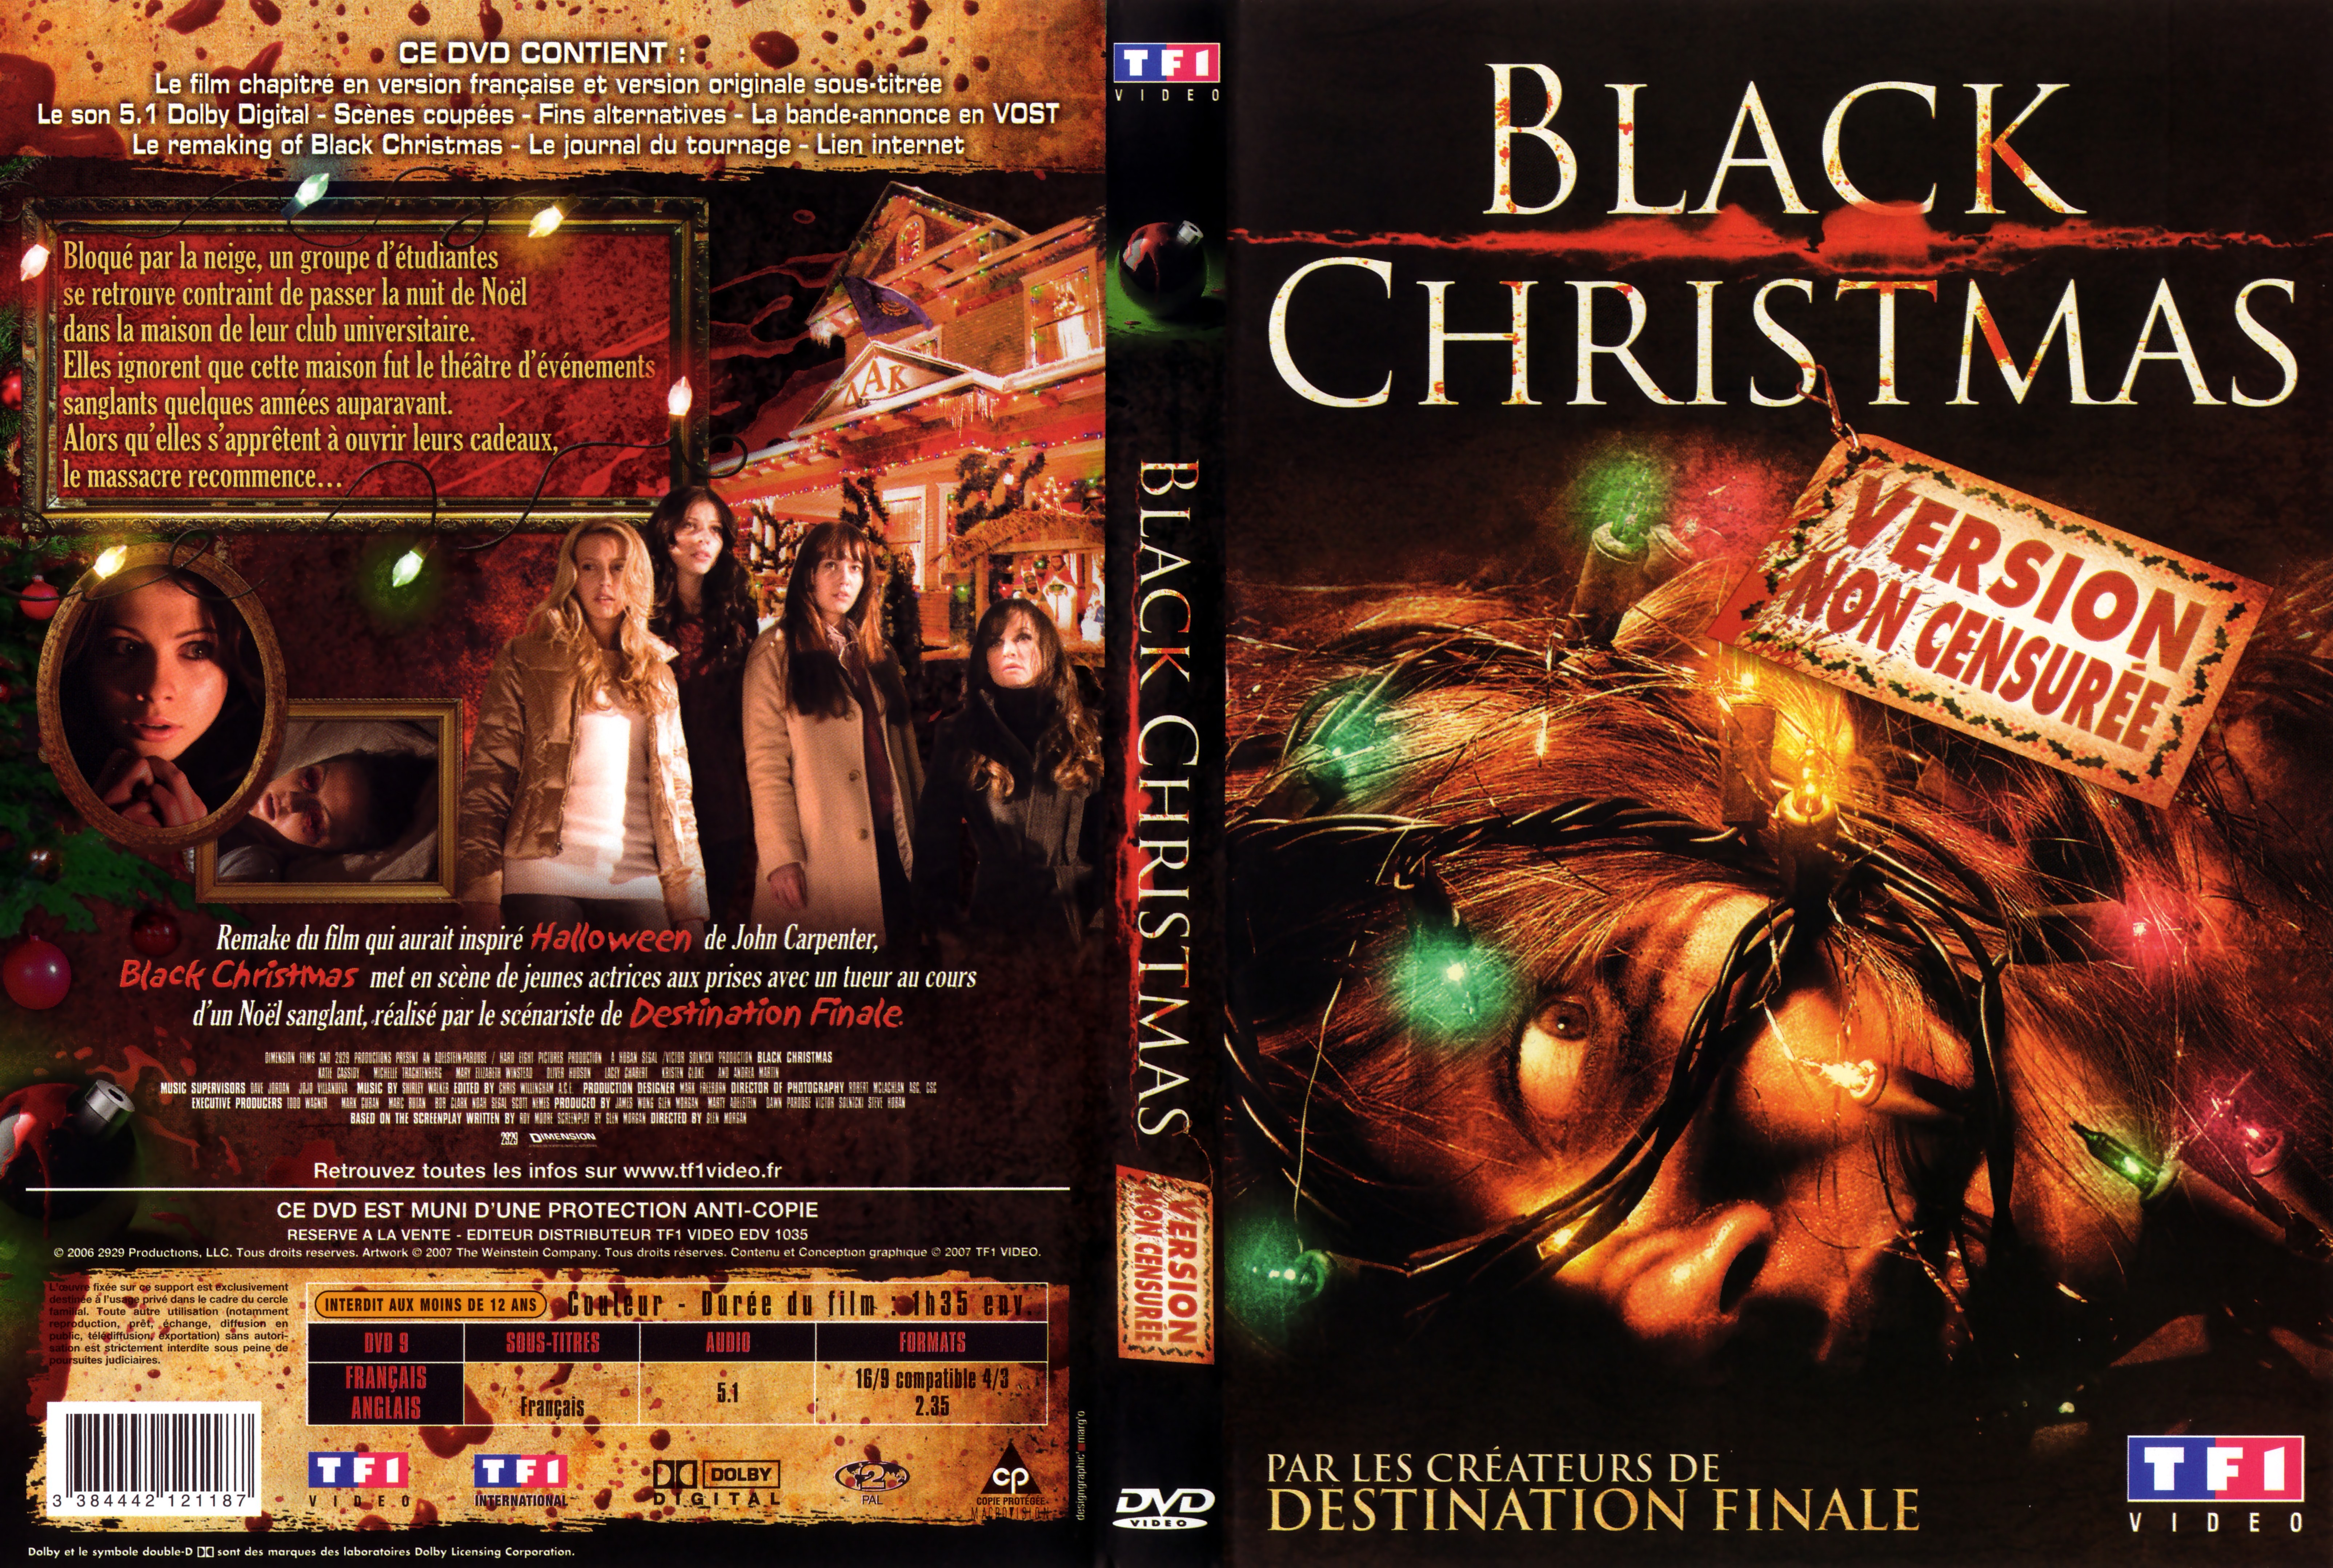 Jaquette DVD Black Christmas v2